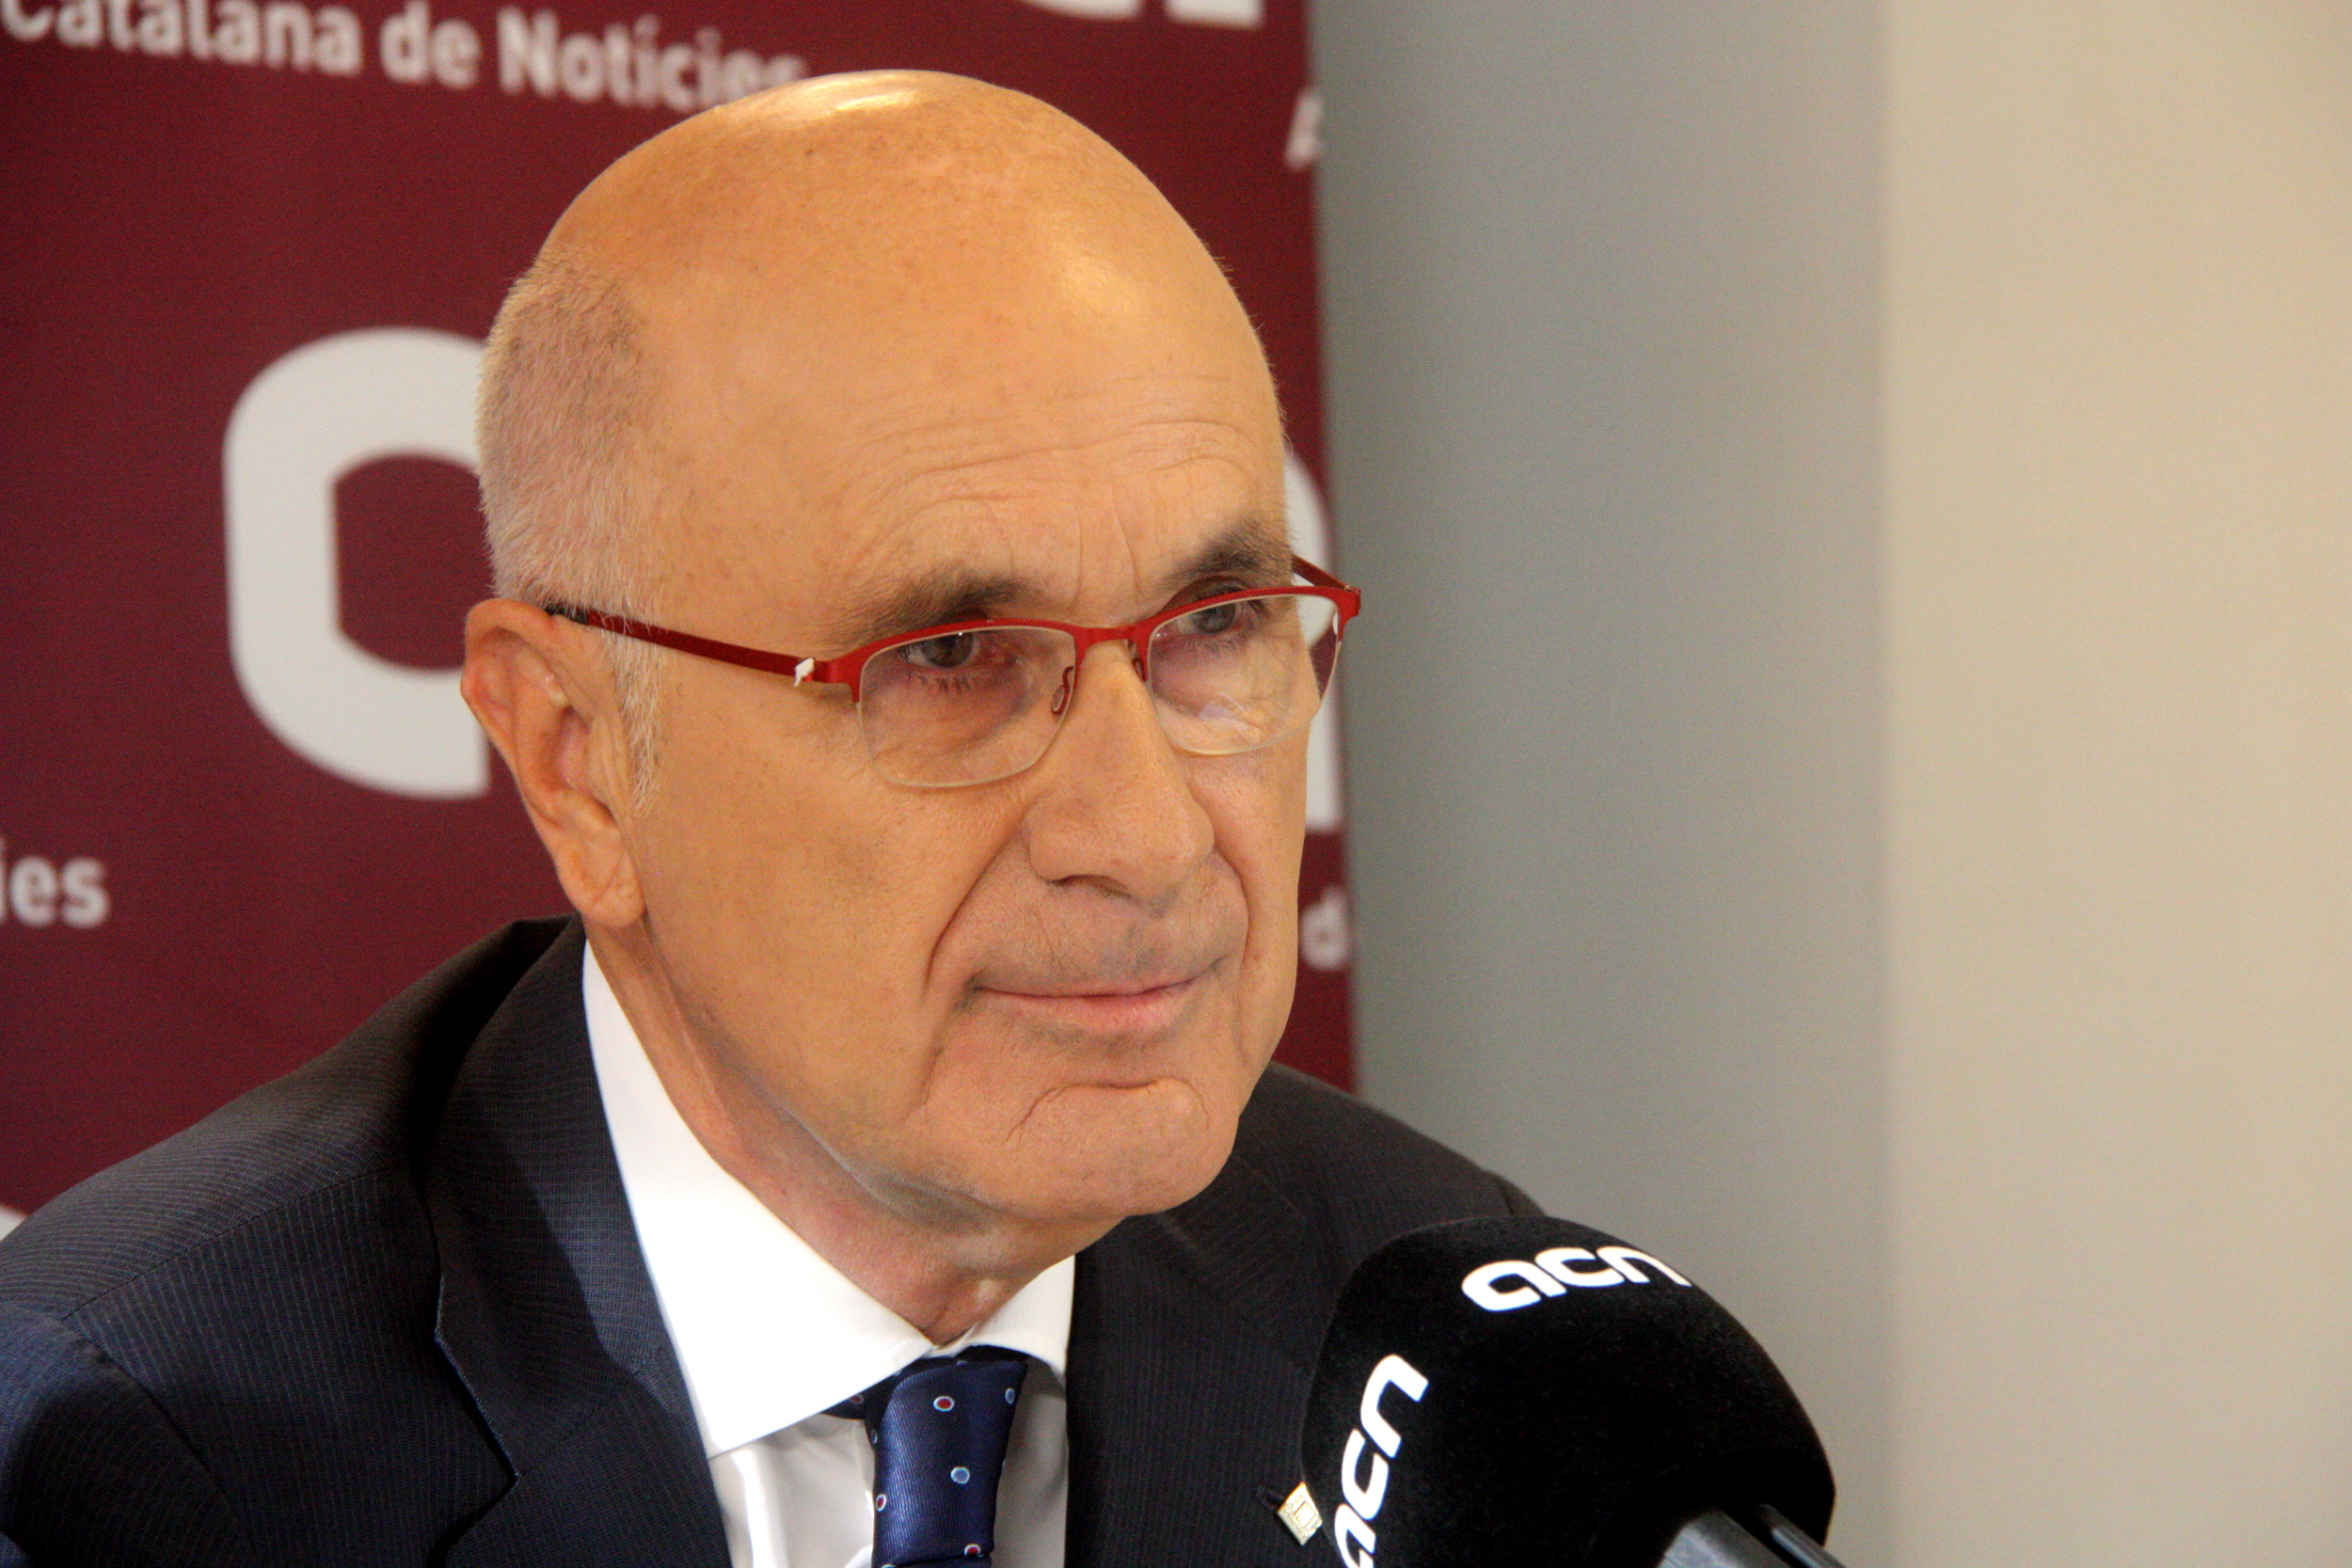 Christian-Democrat Unió's leader, Josep Antoni Duran i Lleida, at his press conference at CNA headquarters (by ACN)